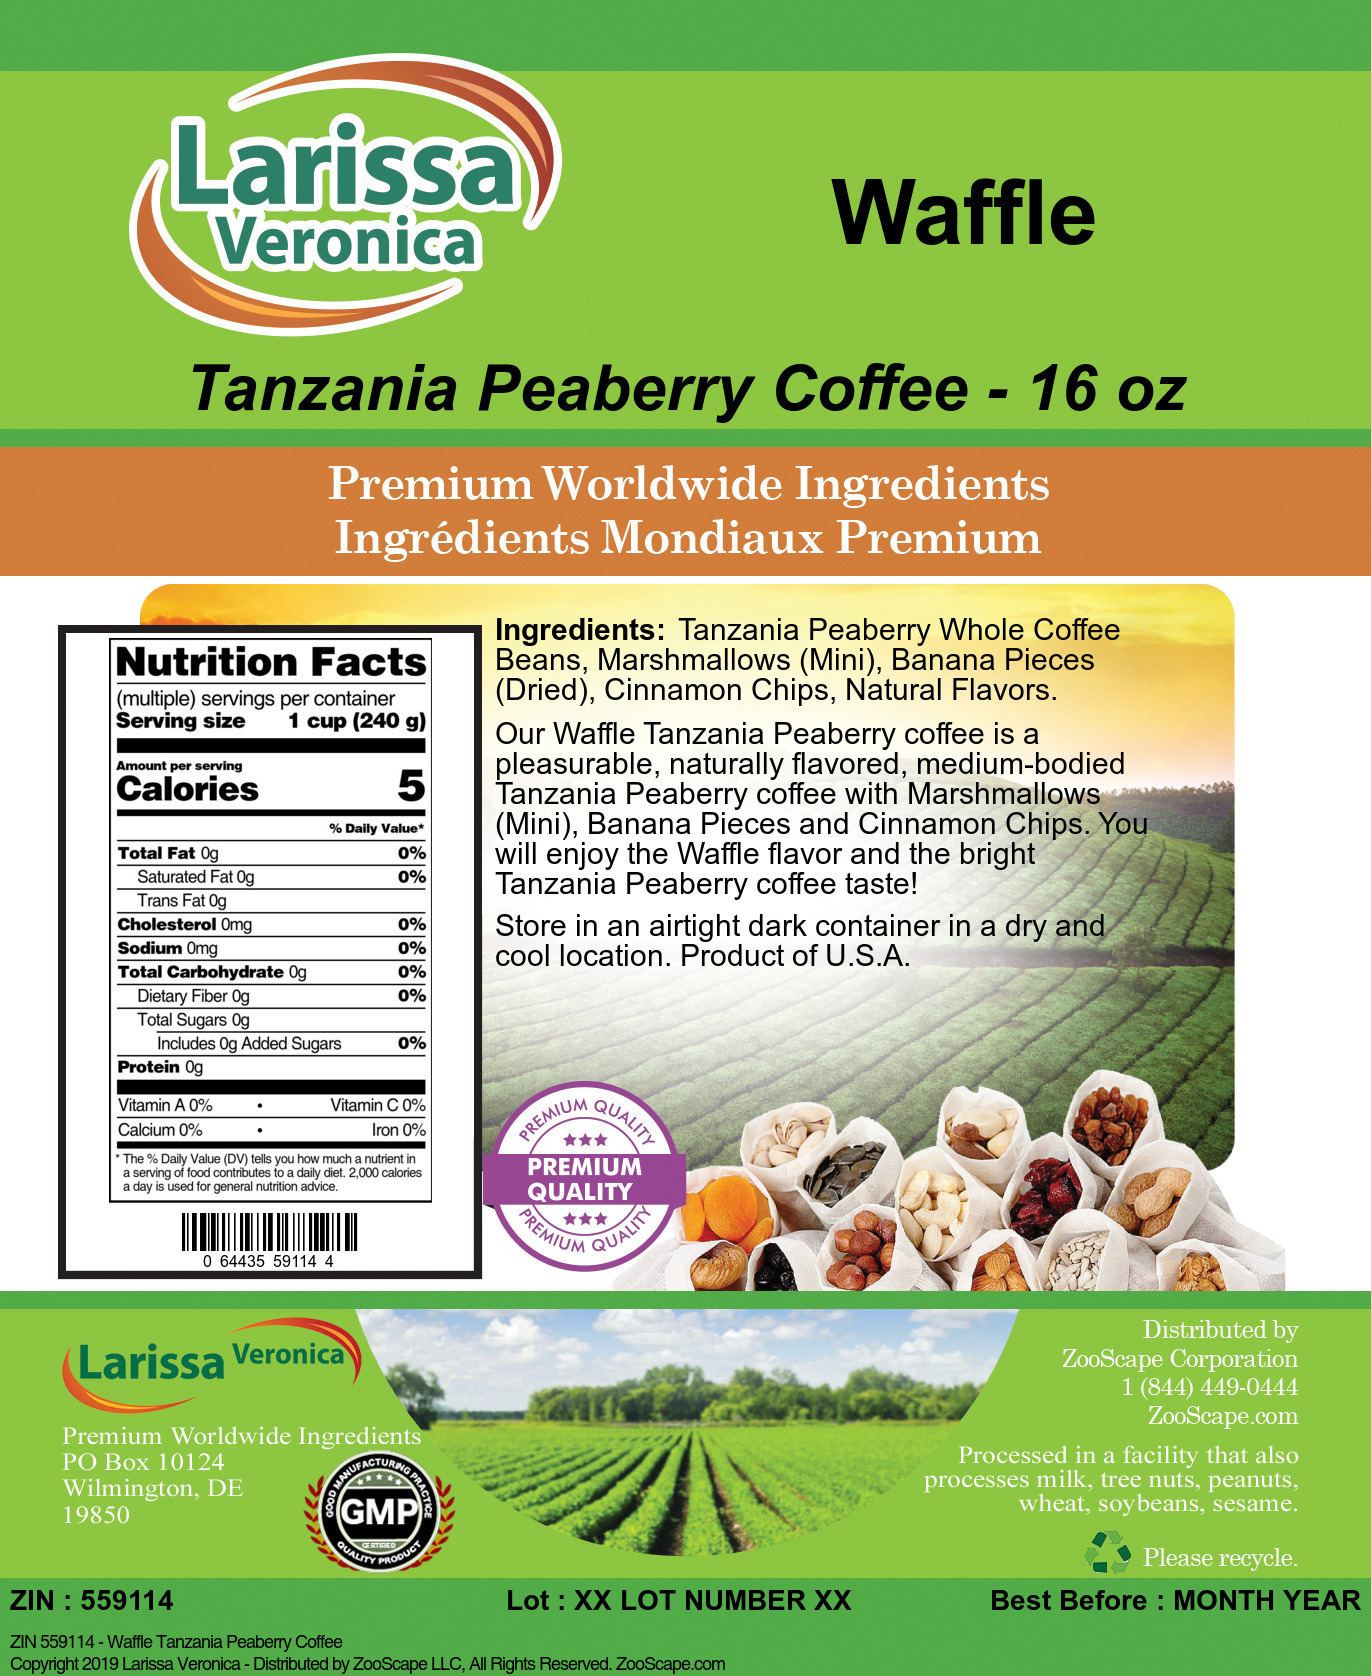 Waffle Tanzania Peaberry Coffee - Label